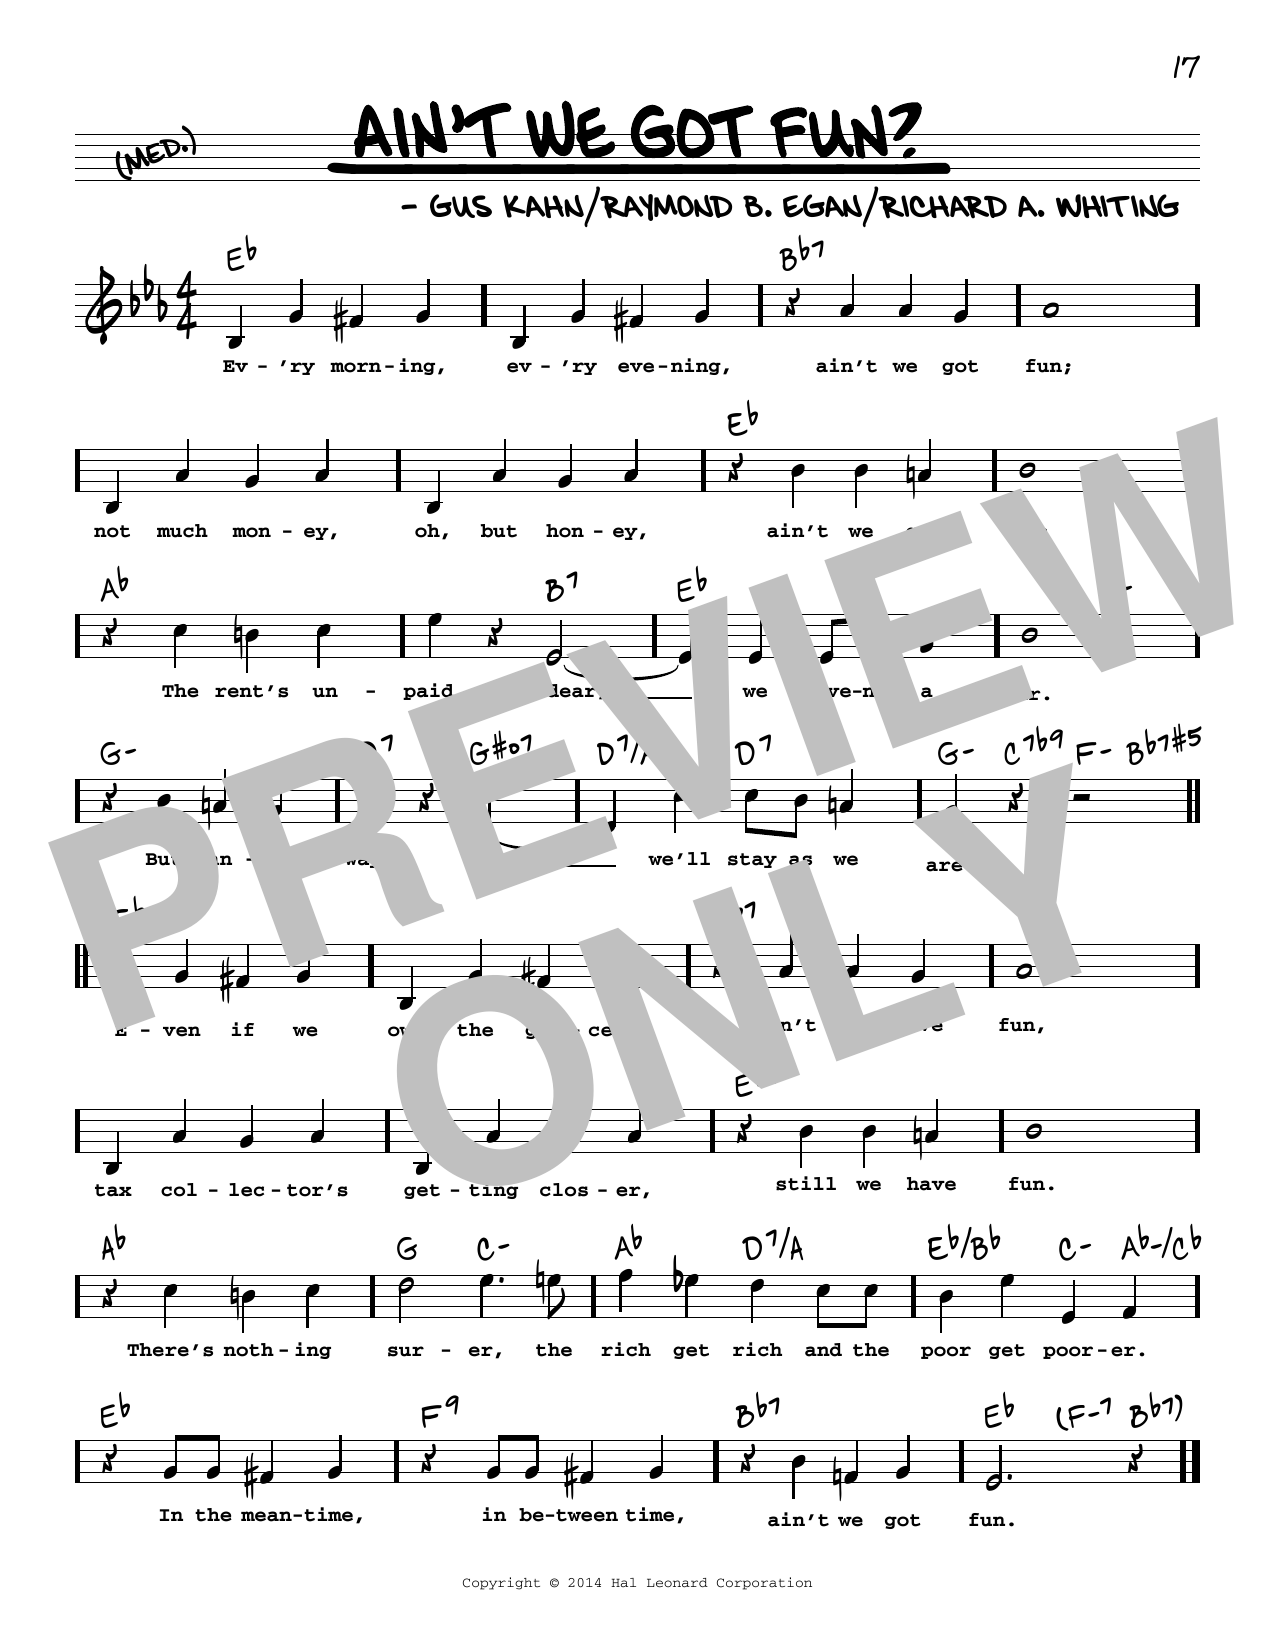 Gus Kahn Ain't We Got Fun? (High Voice) Sheet Music Notes & Chords for Real Book – Melody, Lyrics & Chords - Download or Print PDF